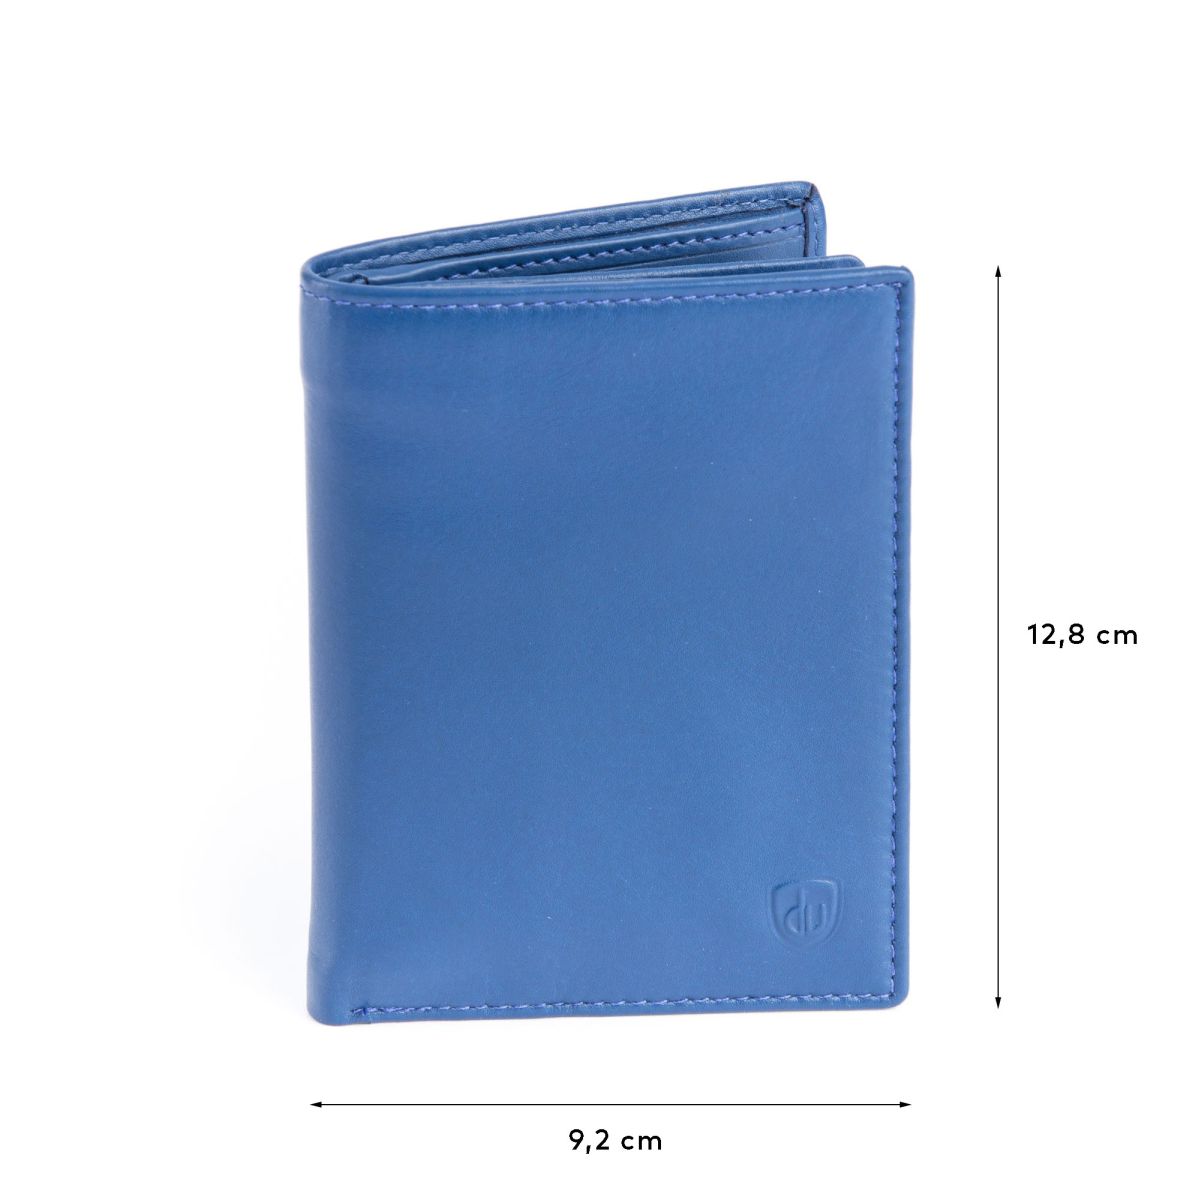 dv Mens leather vertical wallet - Blue